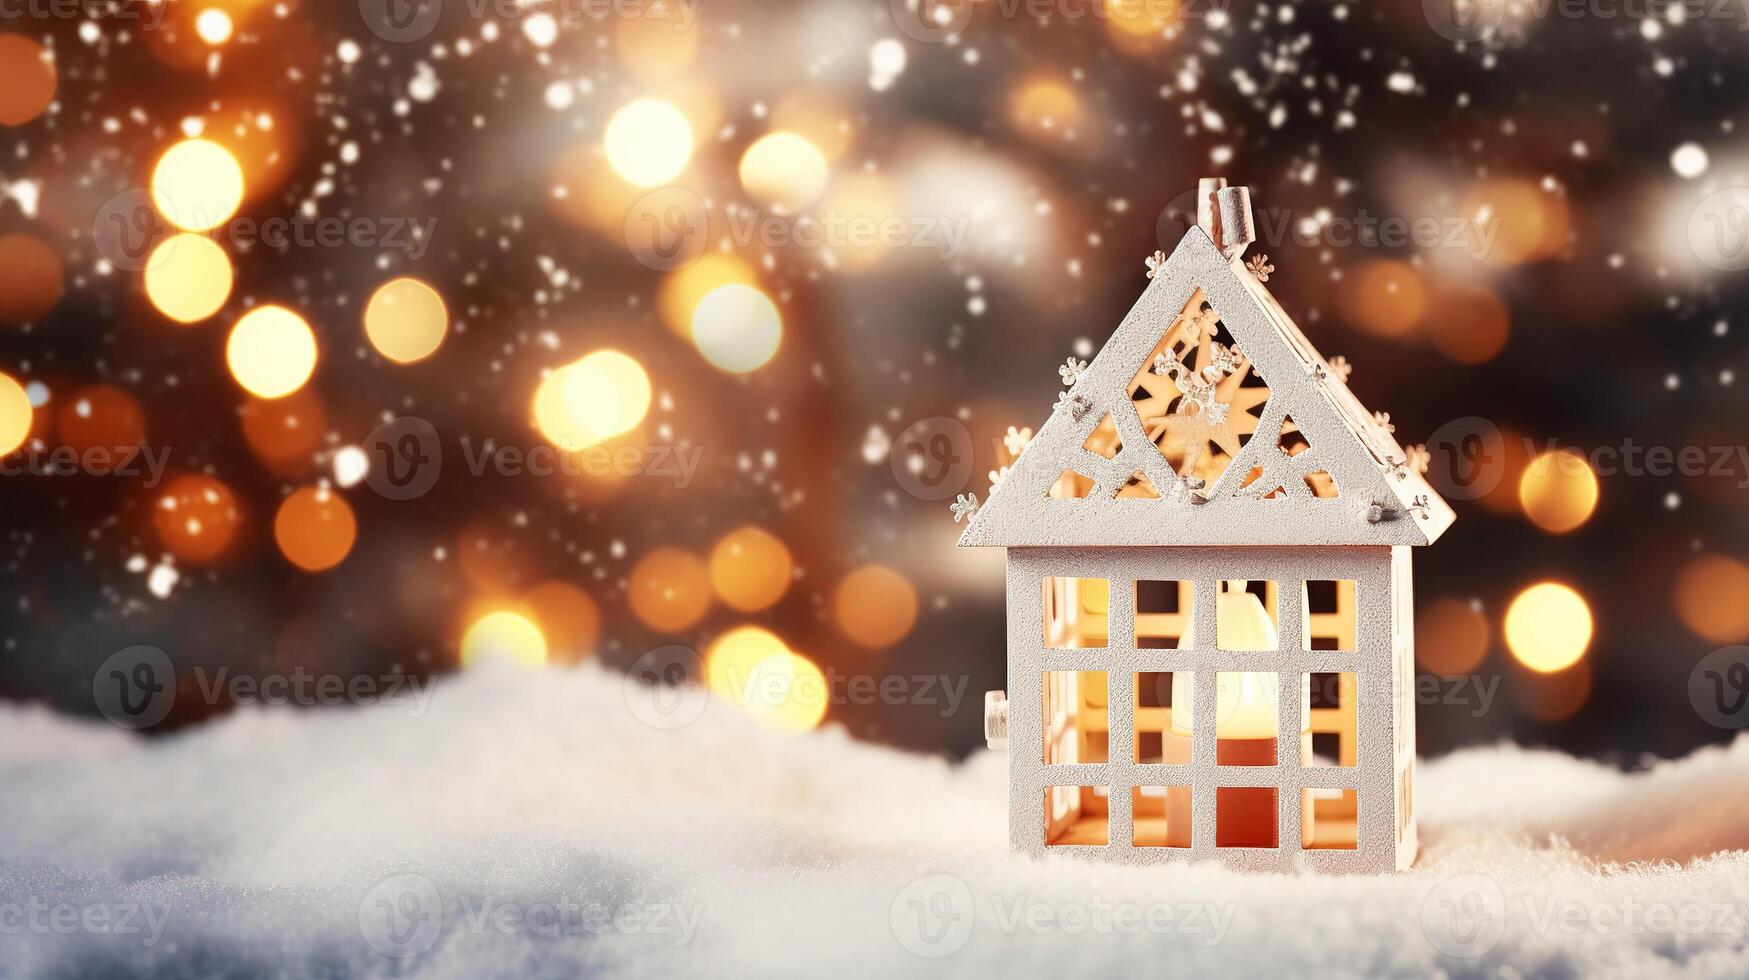 Kerstmis decoraties, speelgoed- huis miniatuur detailopname foto